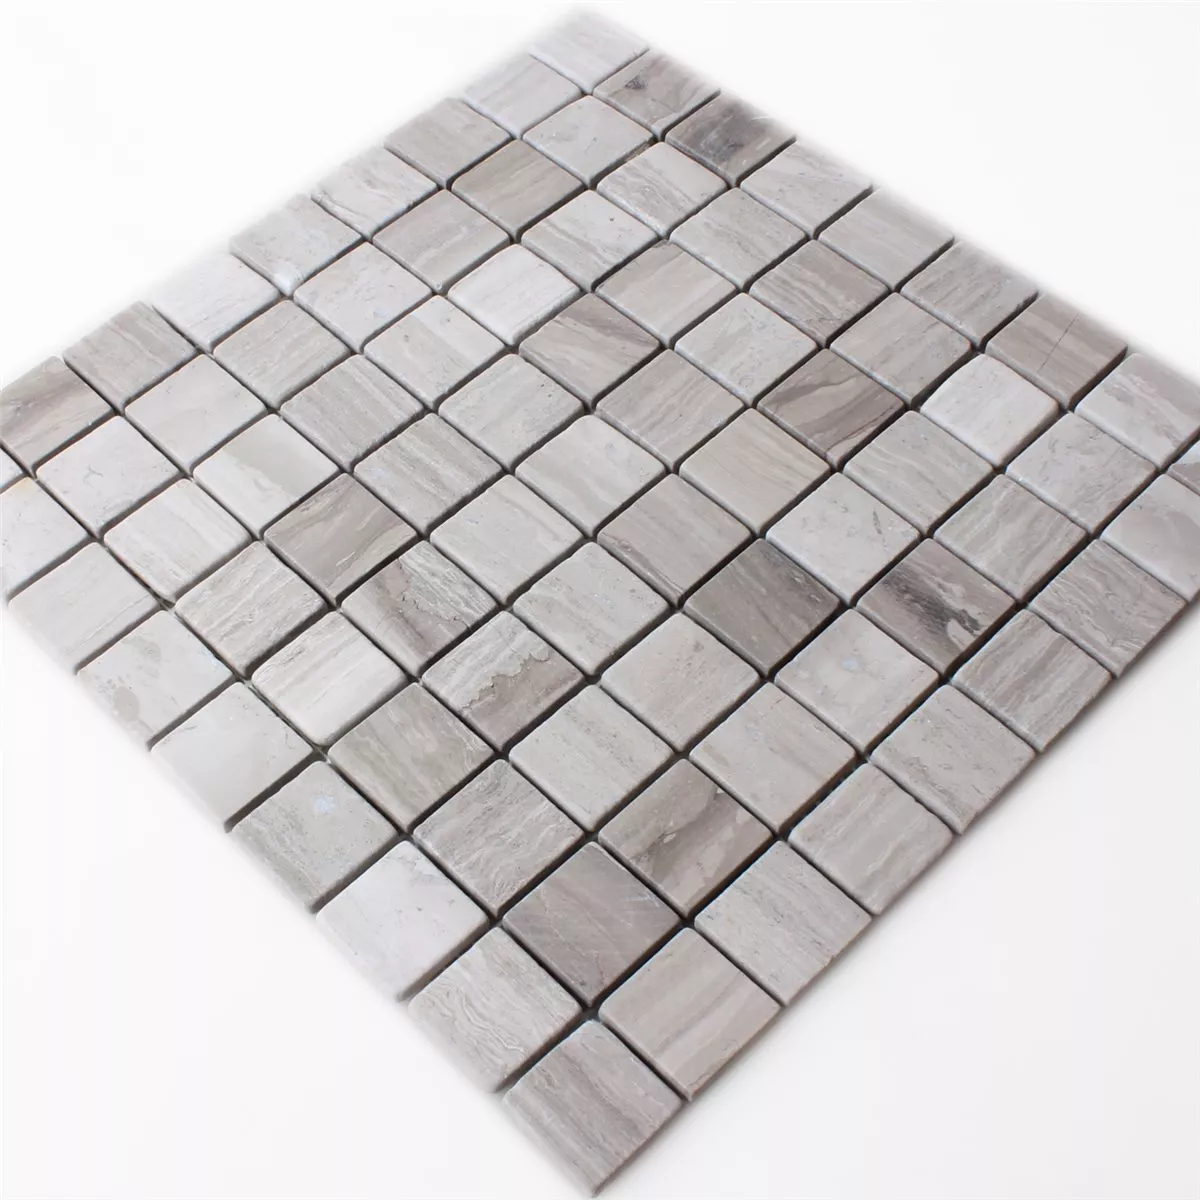 Sample Mosaic Tiles Natural Stone Marble Grey Striped